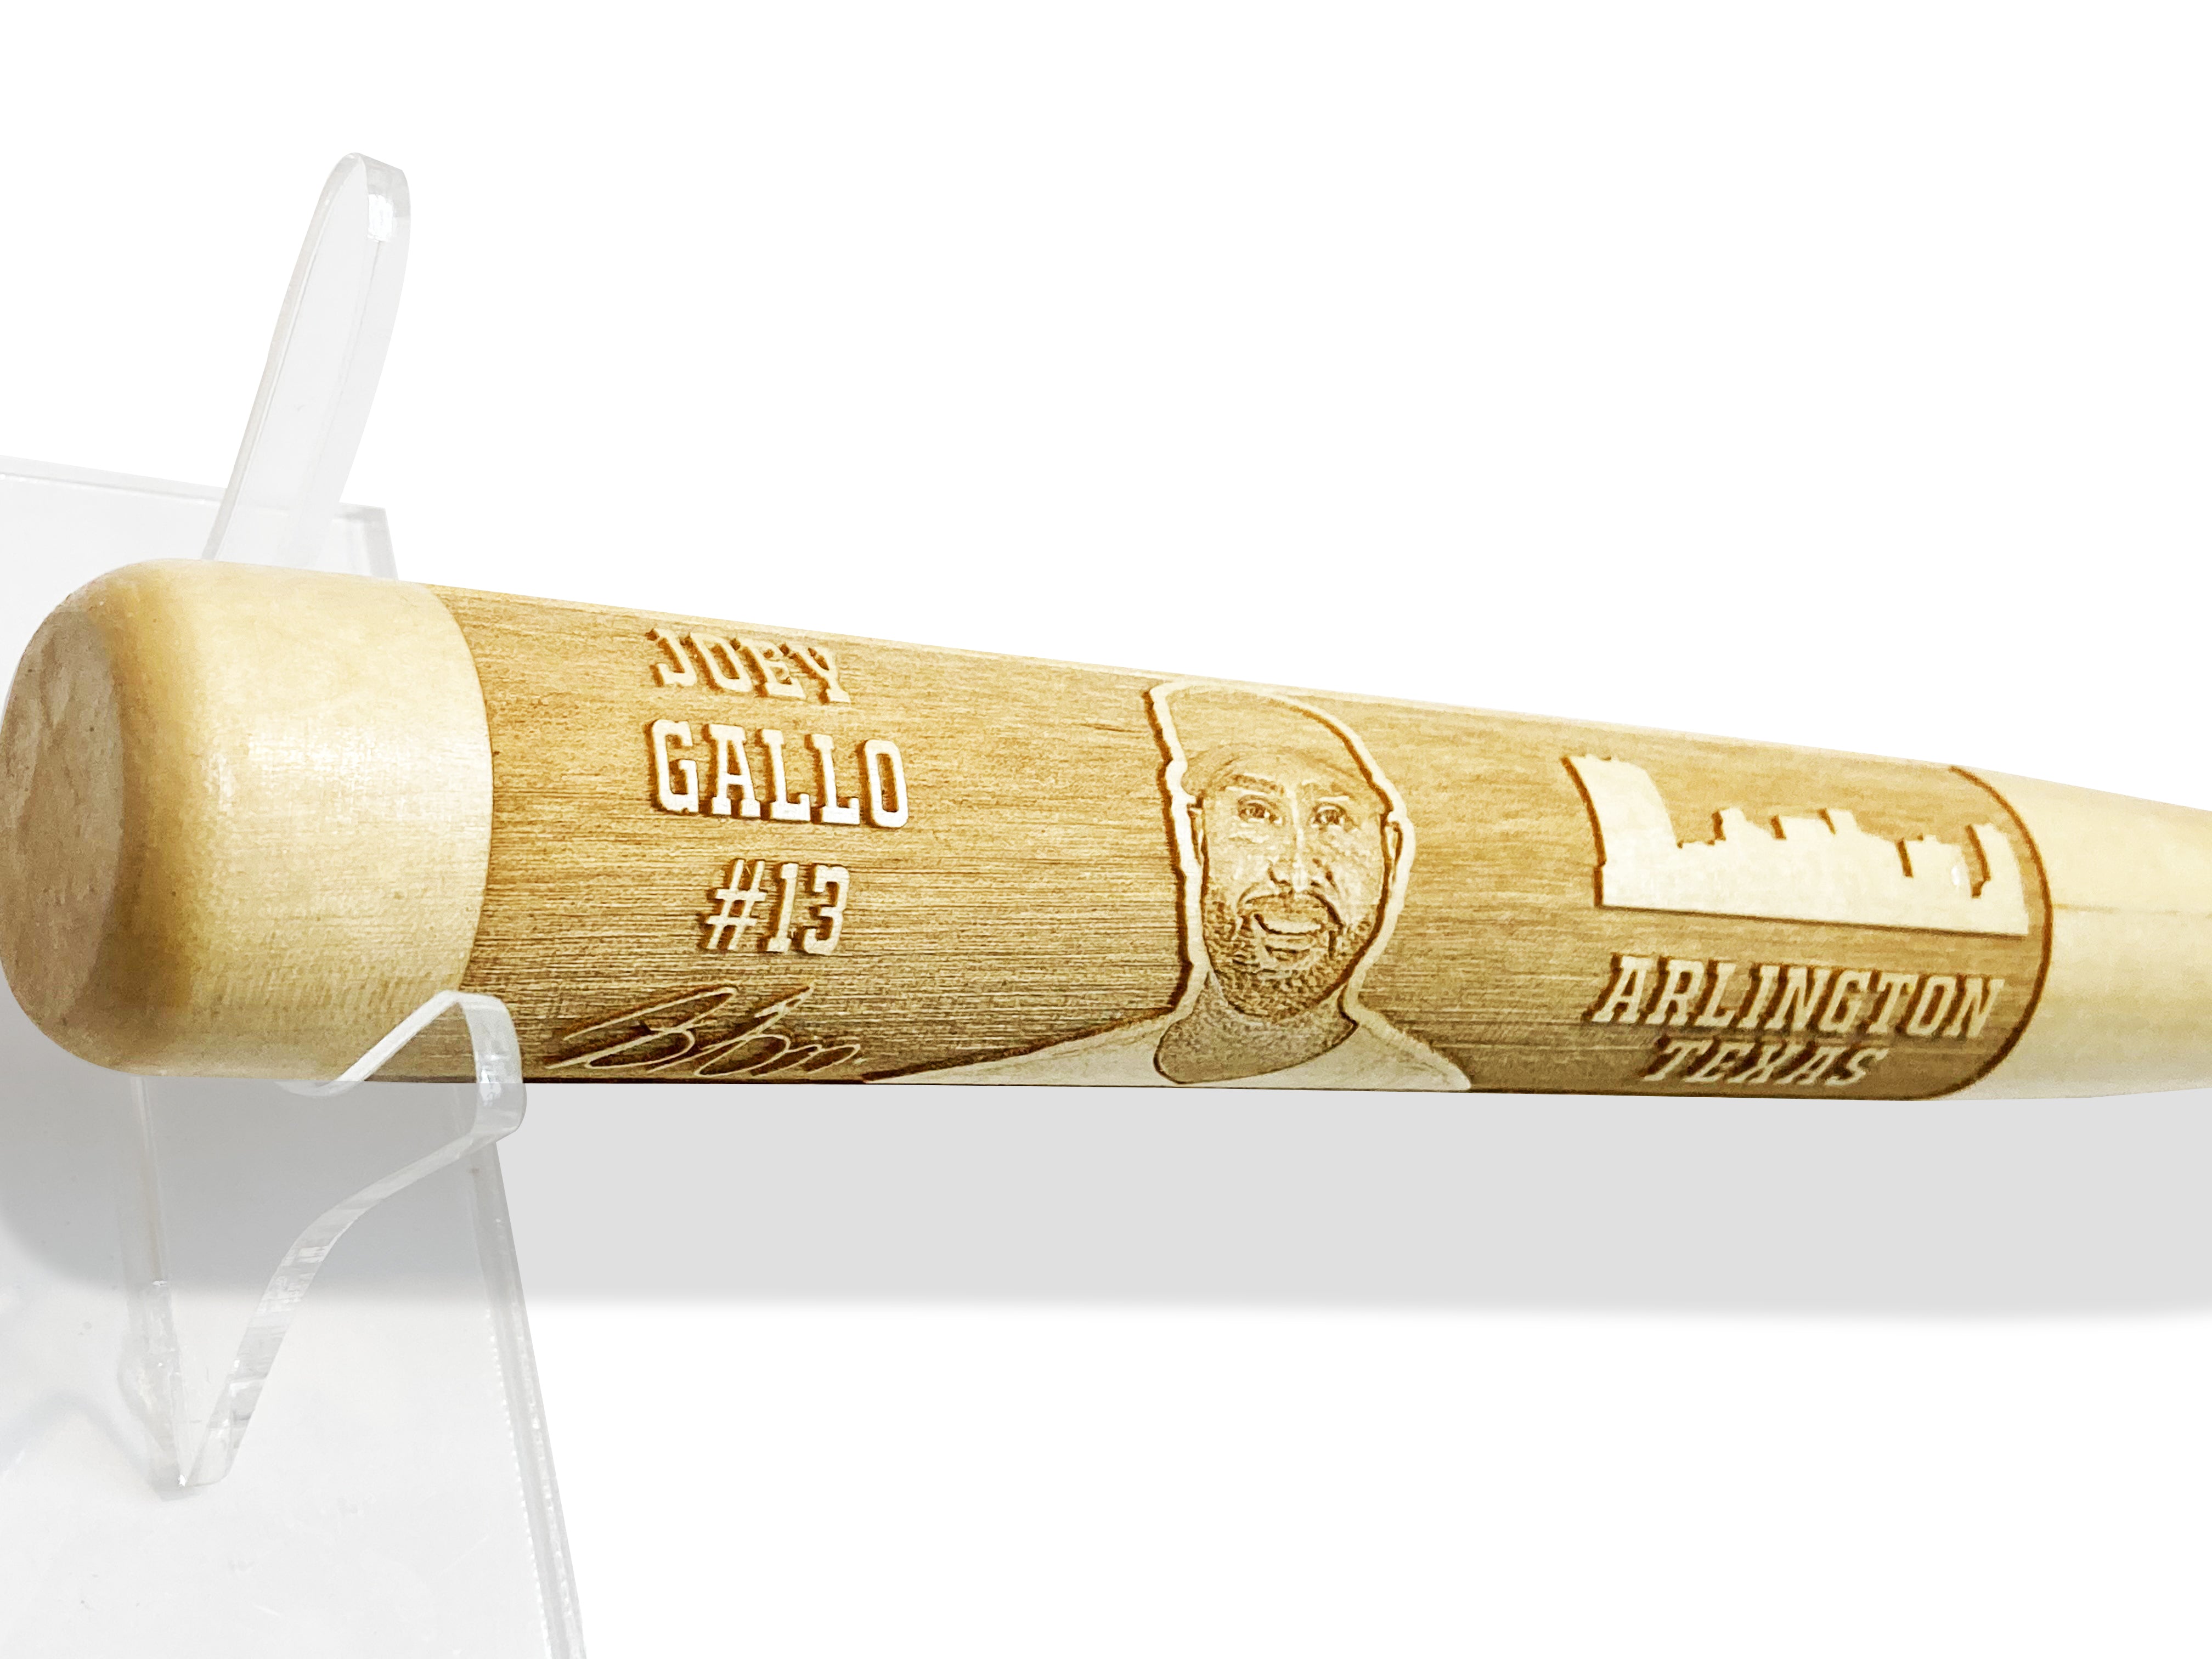 Joey Gallo Laser-Engraved Wood Baseball Bat